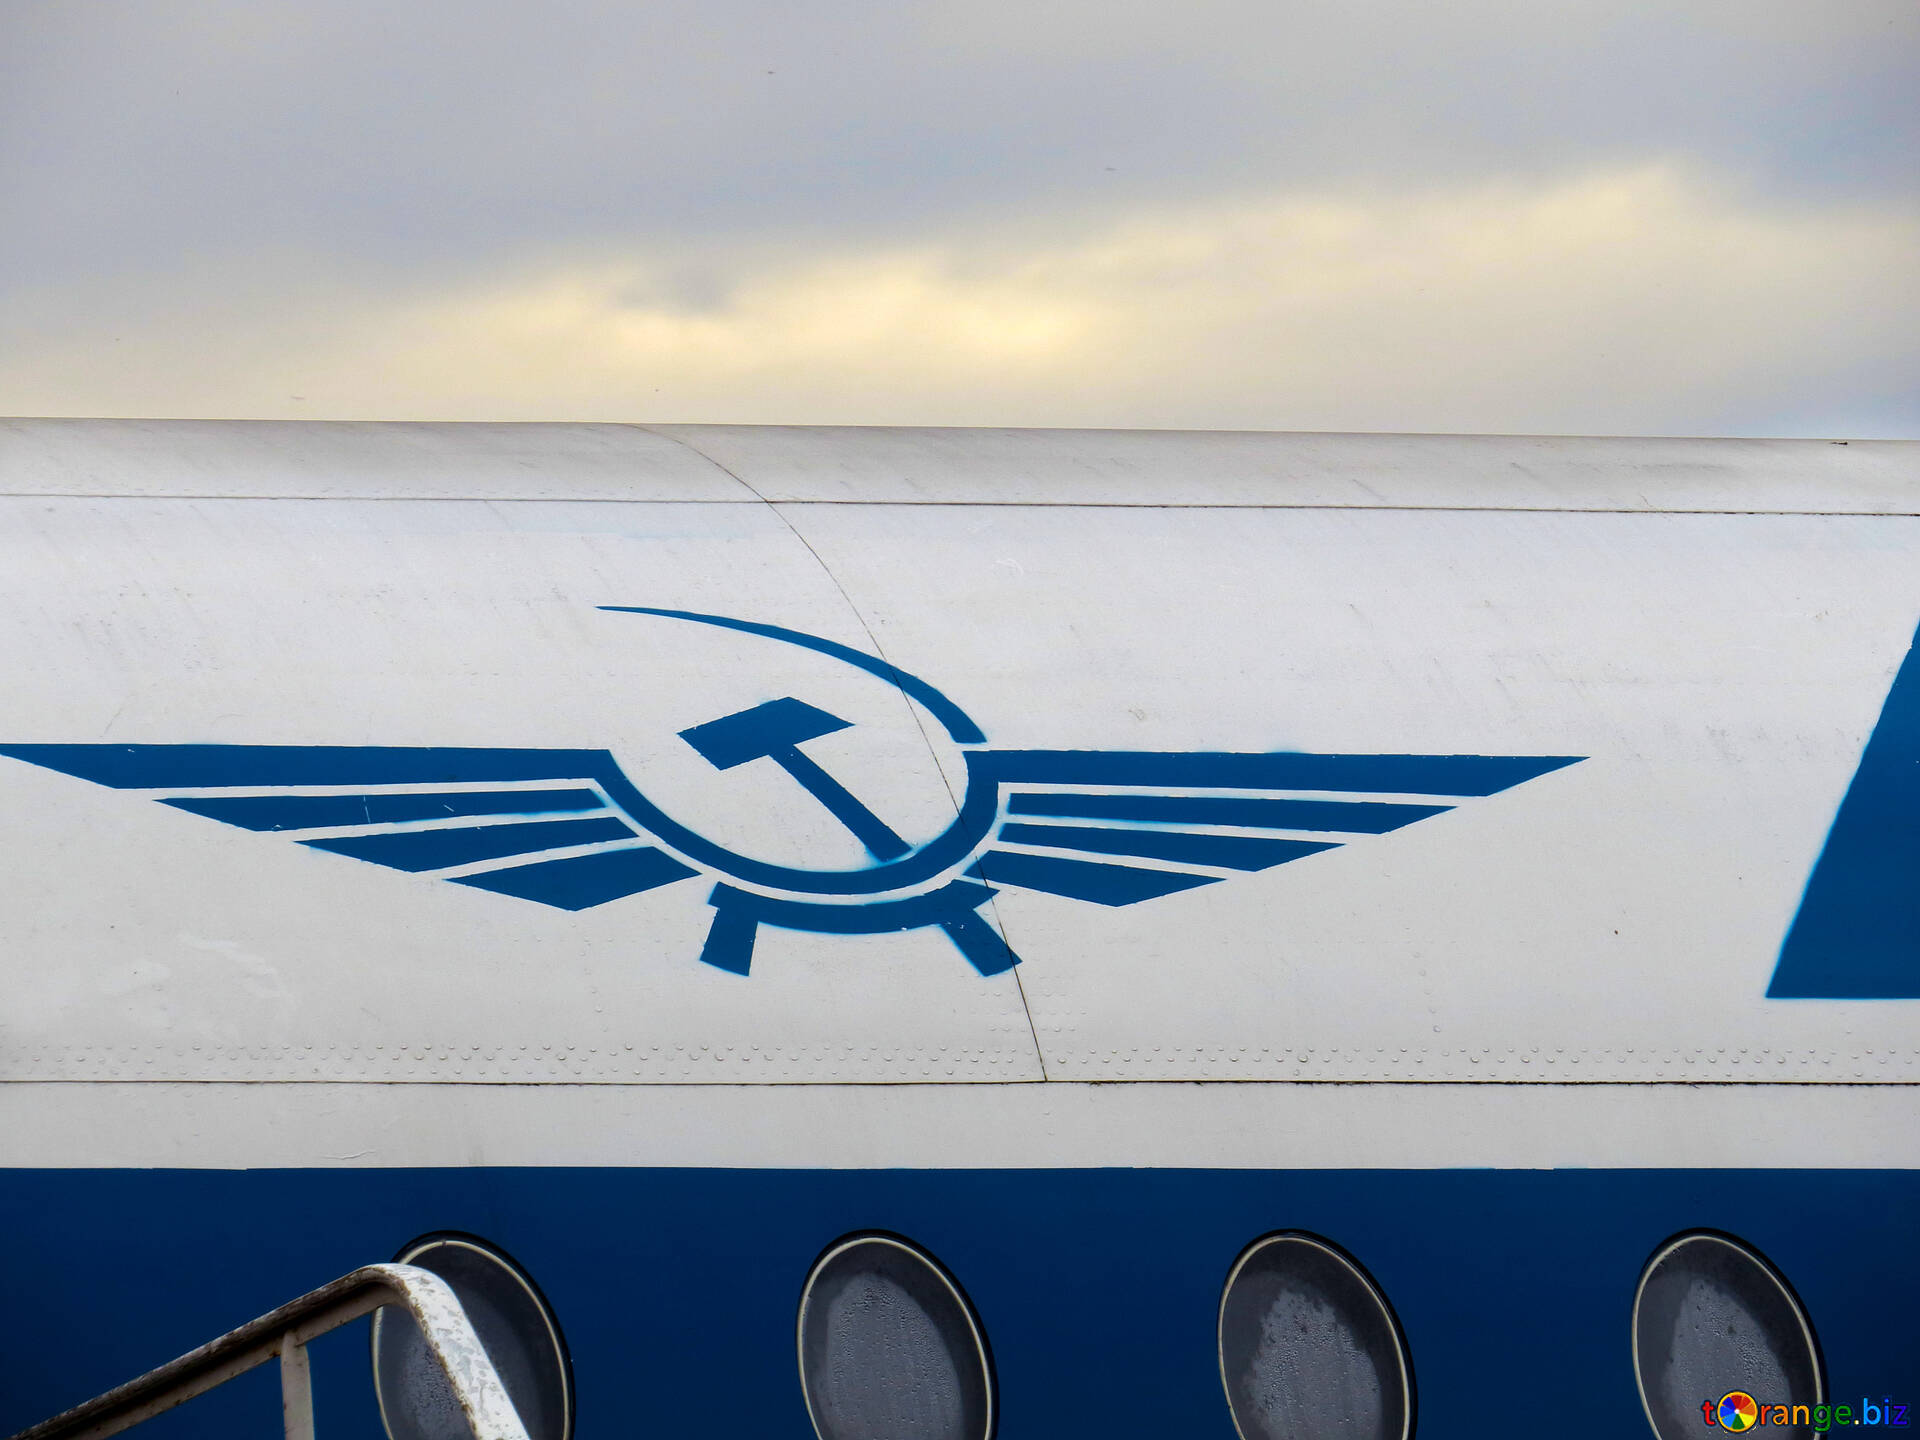 Ussr Soviet Union Technology Image Aeroflot Logo Image Retro № 26418. Torange.biz Free Pics On Cc By License